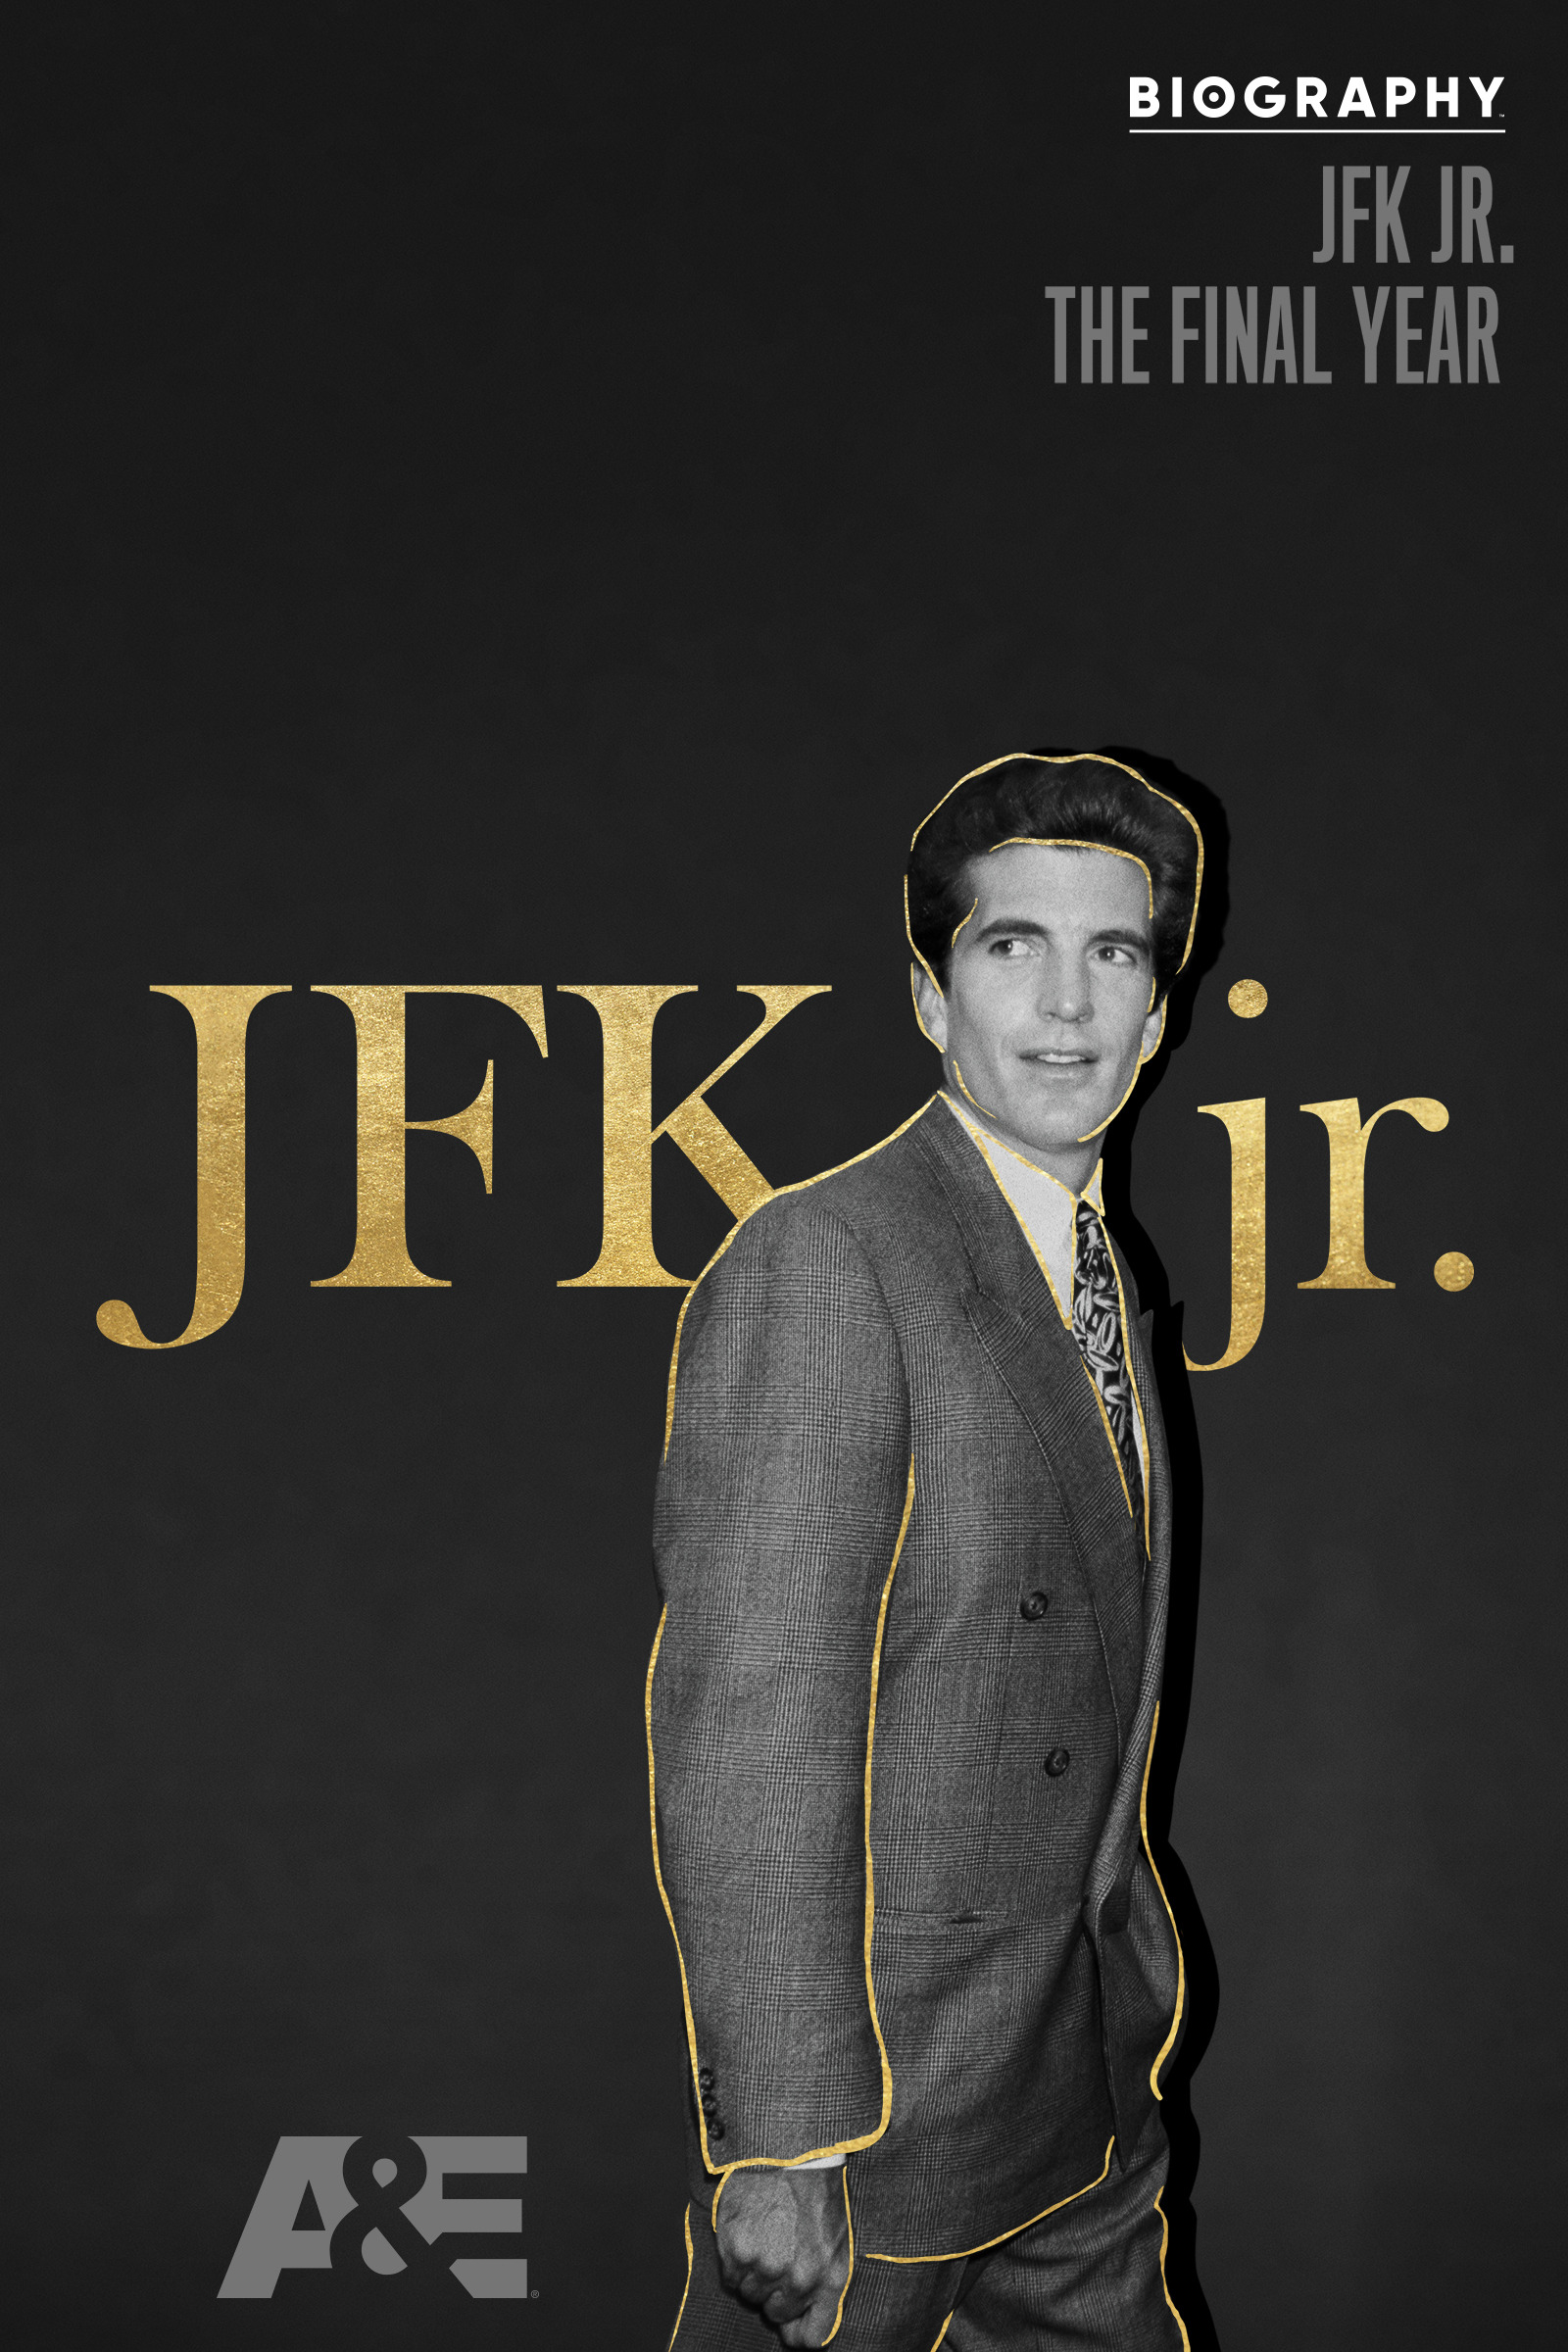 Mega Sized TV Poster Image for Biography: JFK Jr. The Final Year 